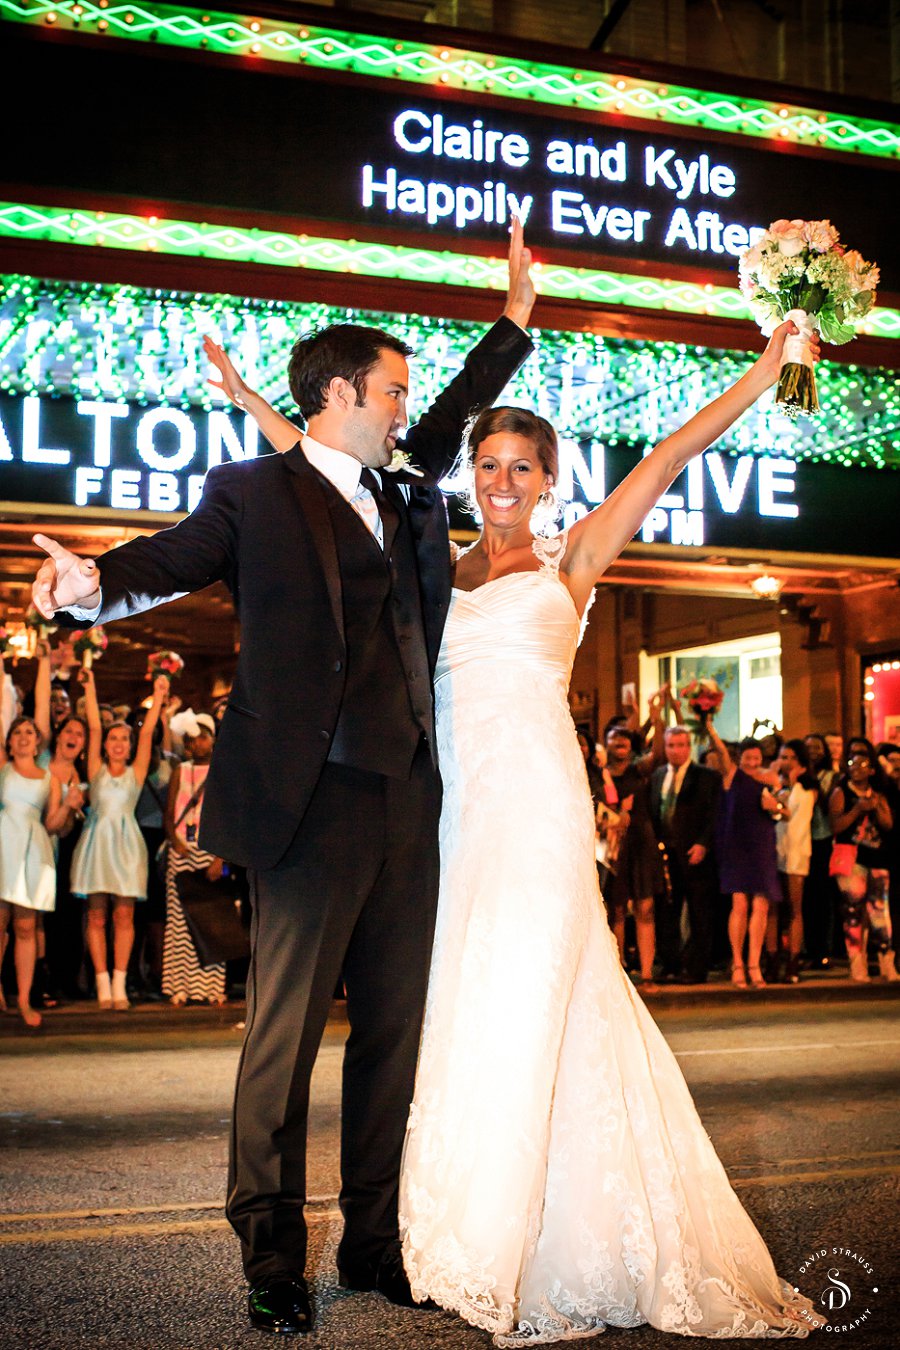 Atlanta Wedding Photography - Charleston Photographer David Strauss - Claire and Kyle - 65